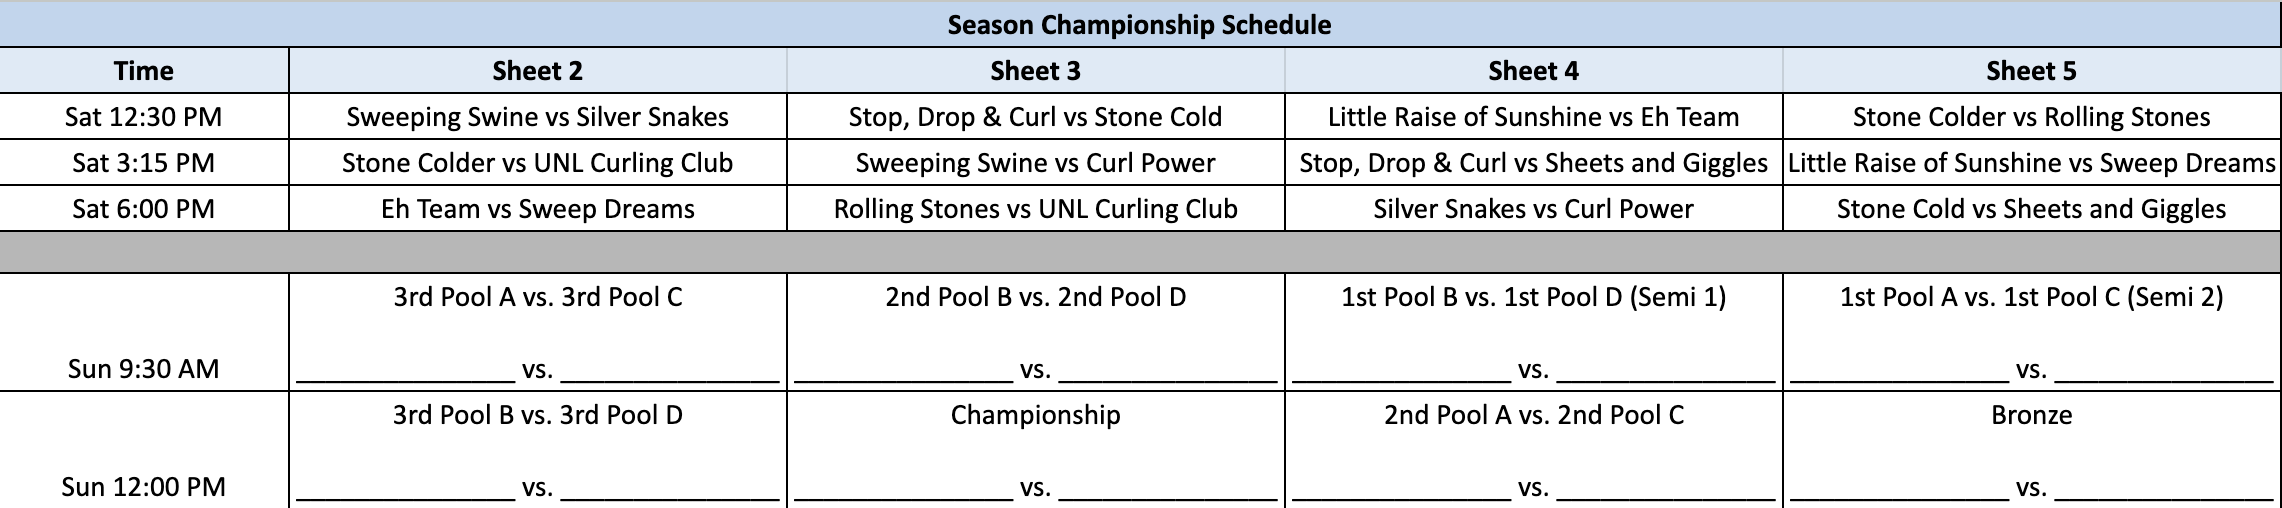 Season Championship Schedule